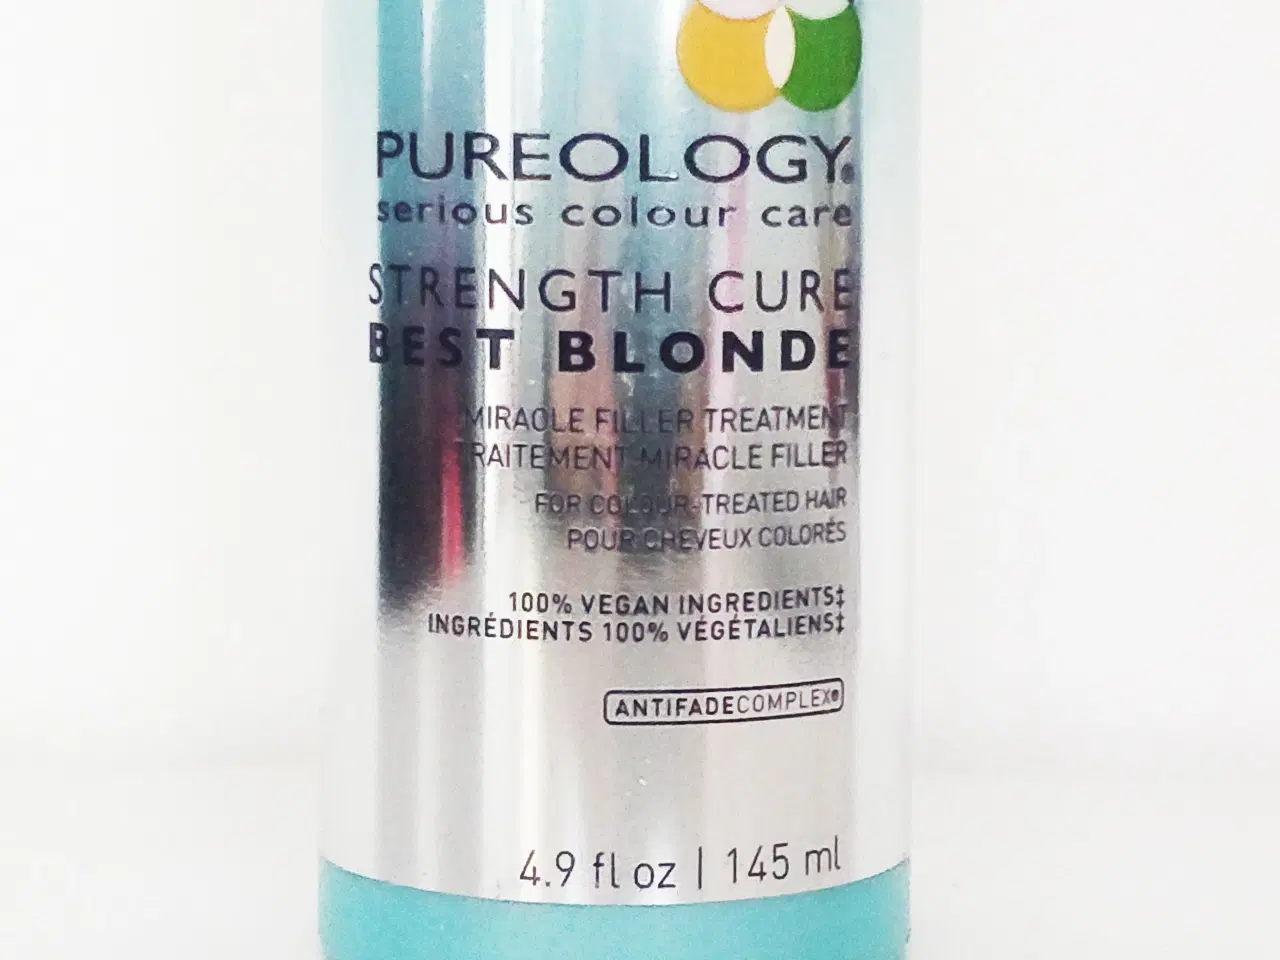 Billede 4 - Pureology Strength Cure Best Blonde Miracle Filler